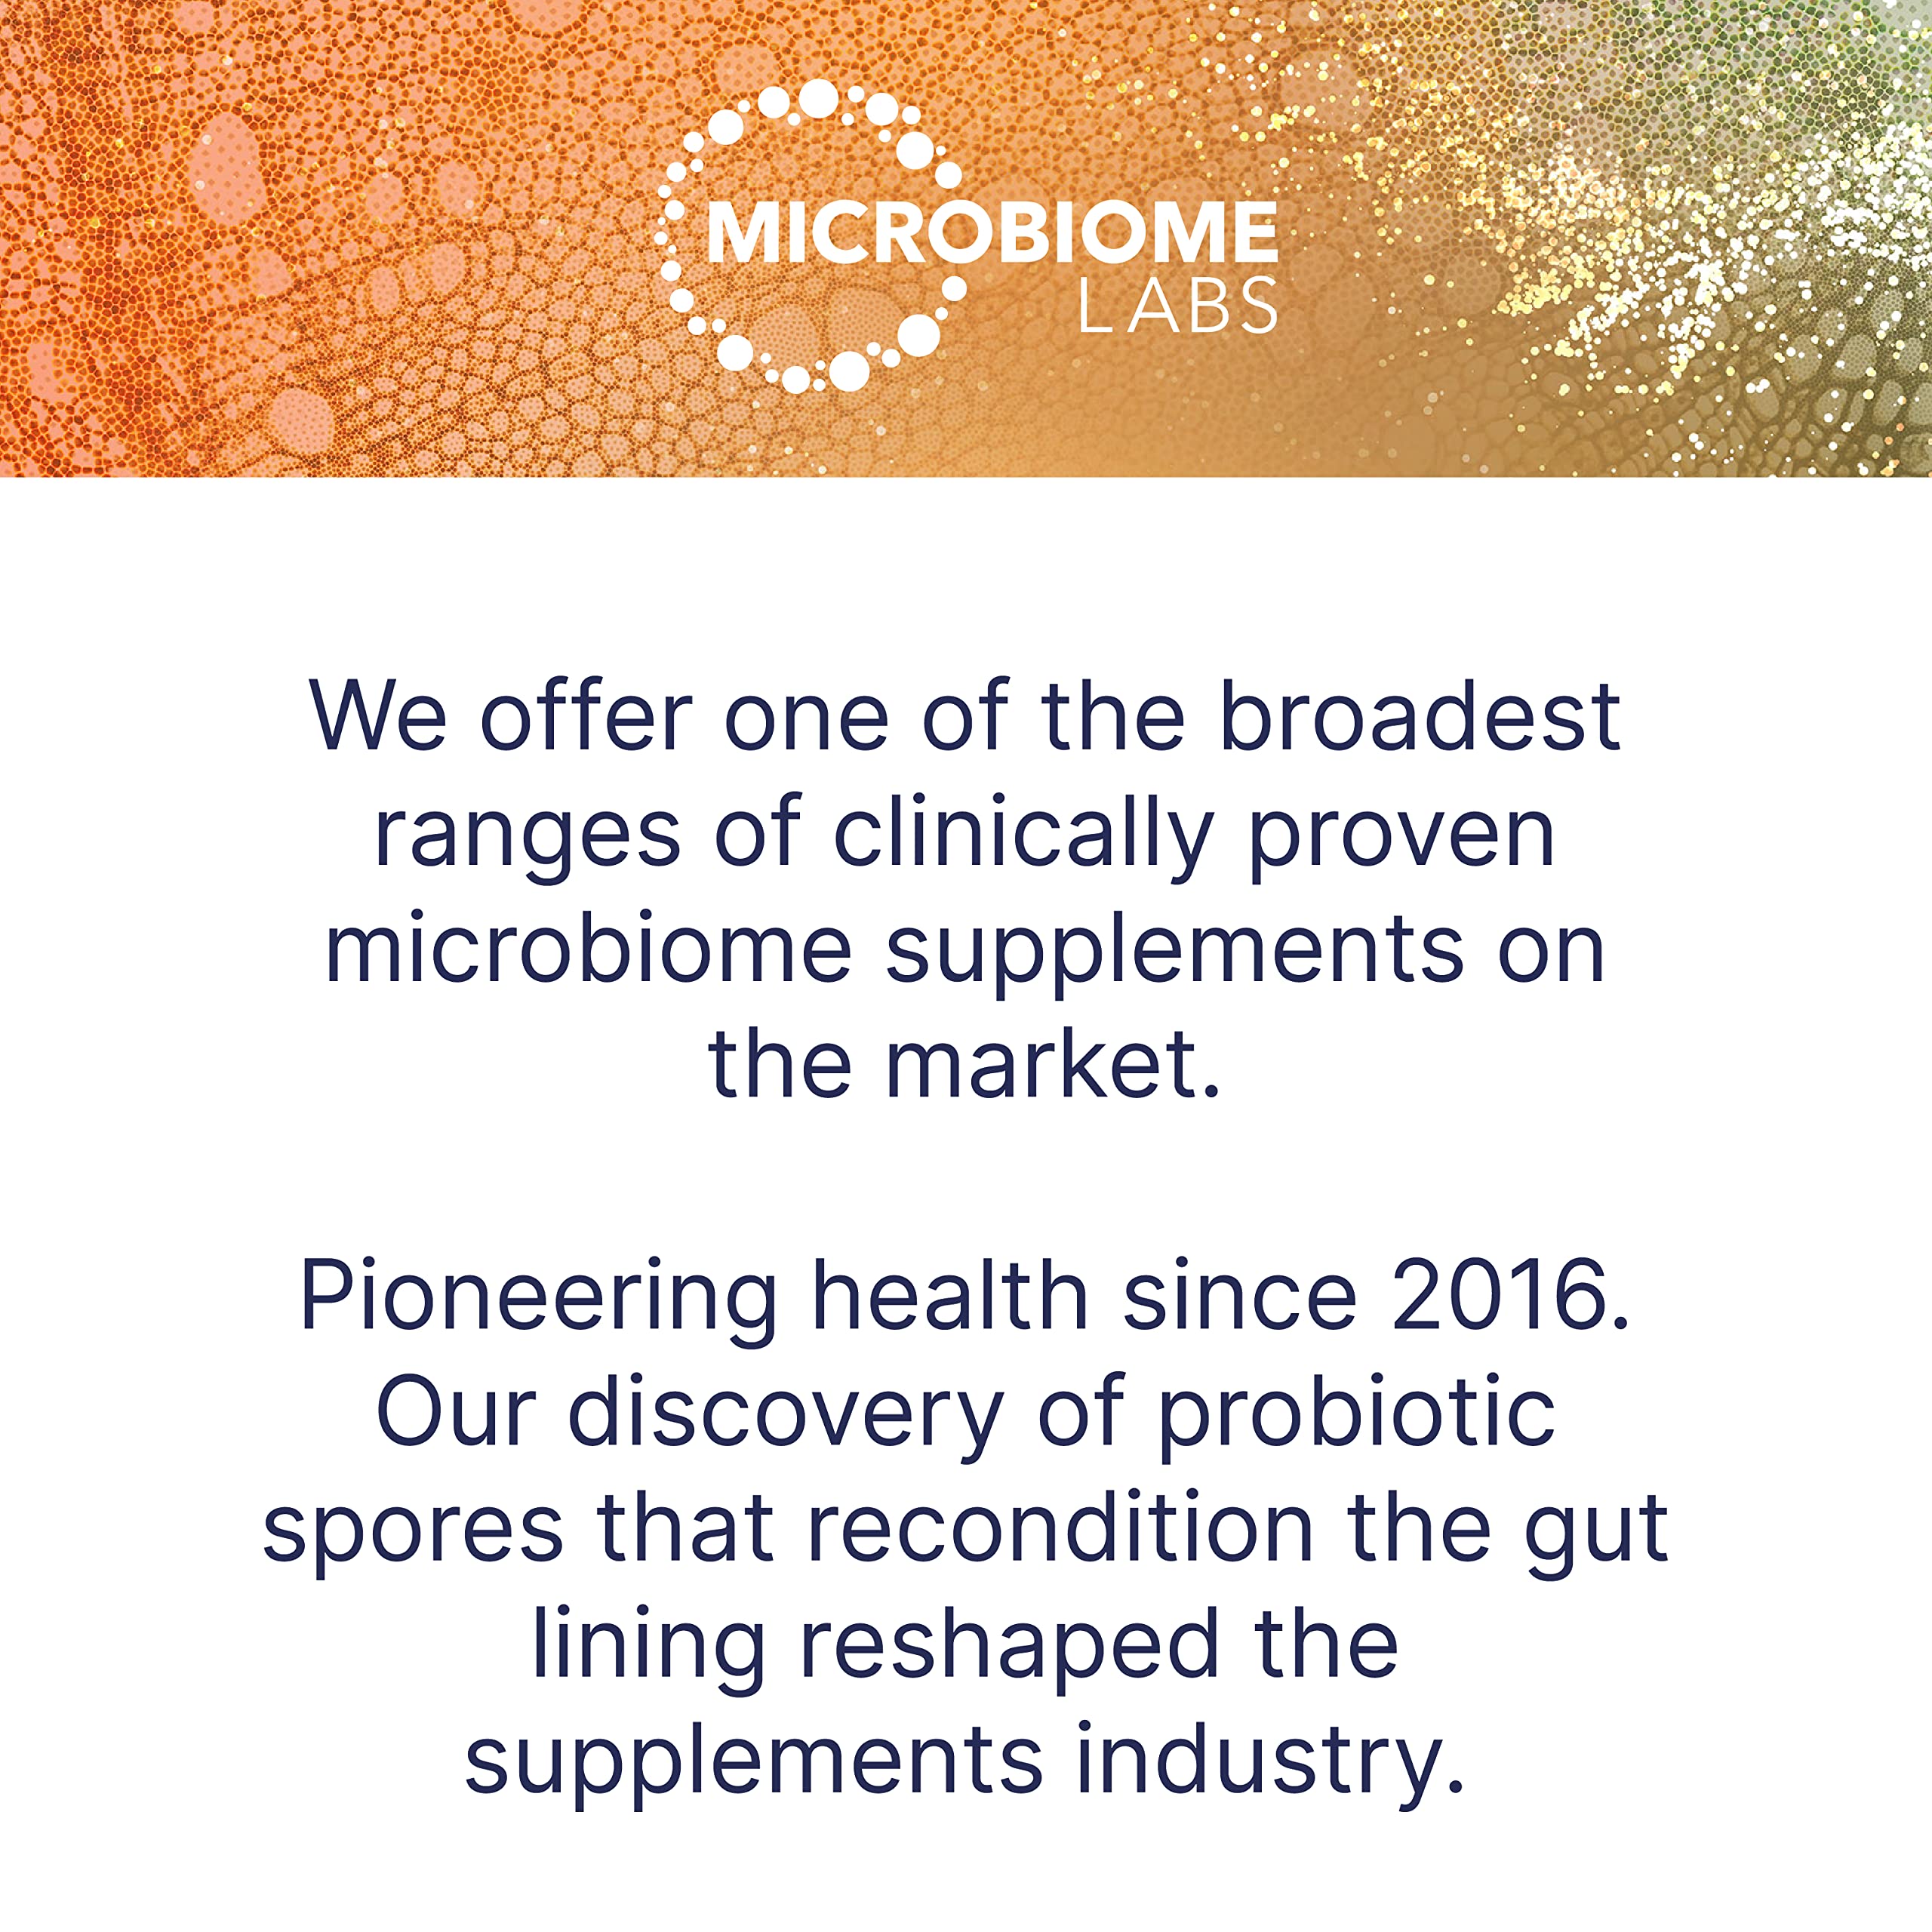 Microbiome Labs MegaSporeBiotic - Spore Based Probiotic to Support Gut Health - Proprietary Probiotic Blend Including Bacillus Coagulans + Bacillus Subtilis - Spore Probiotic for Daily Use (60 Count)